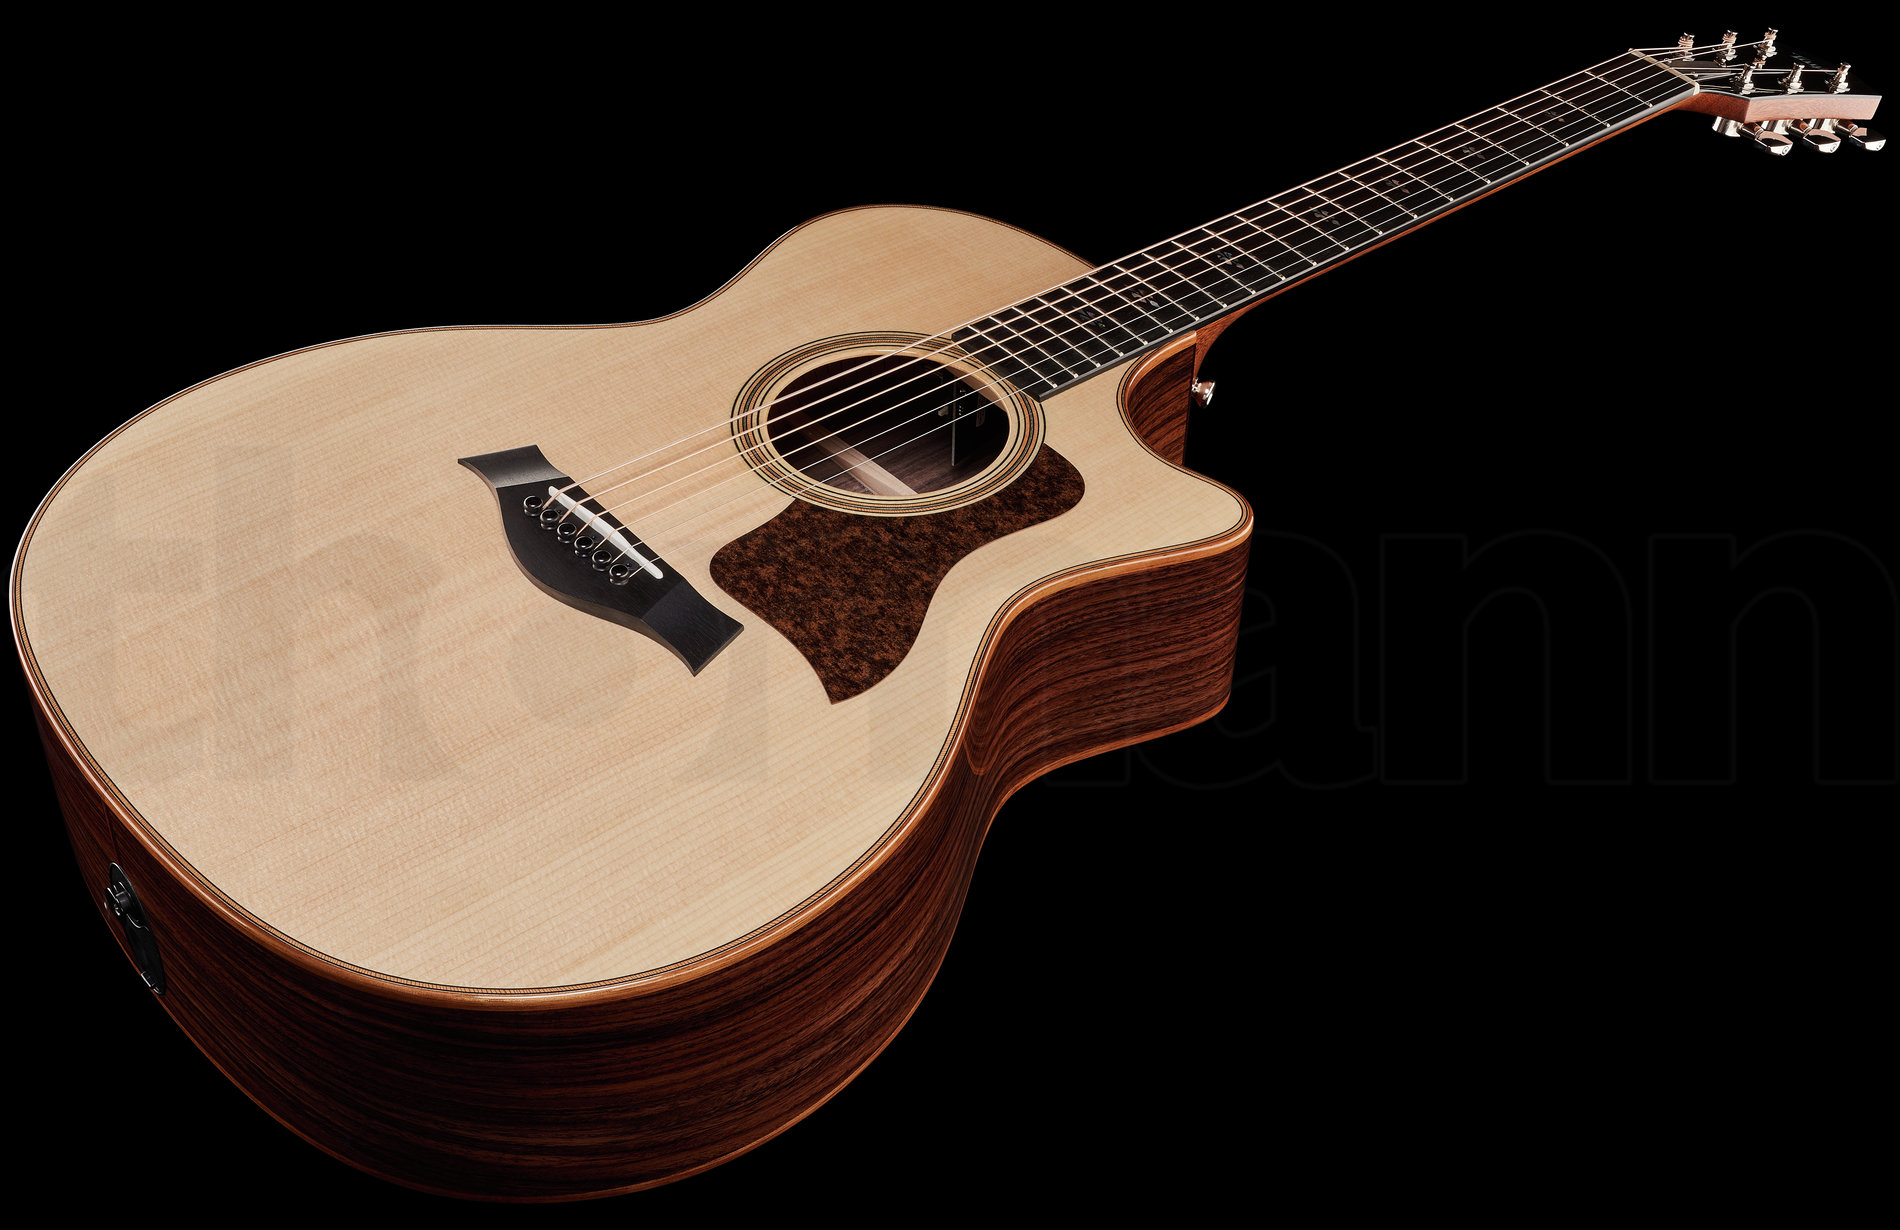 Produktbild einer Taylor Guitars 714CE Akustikgitarre.